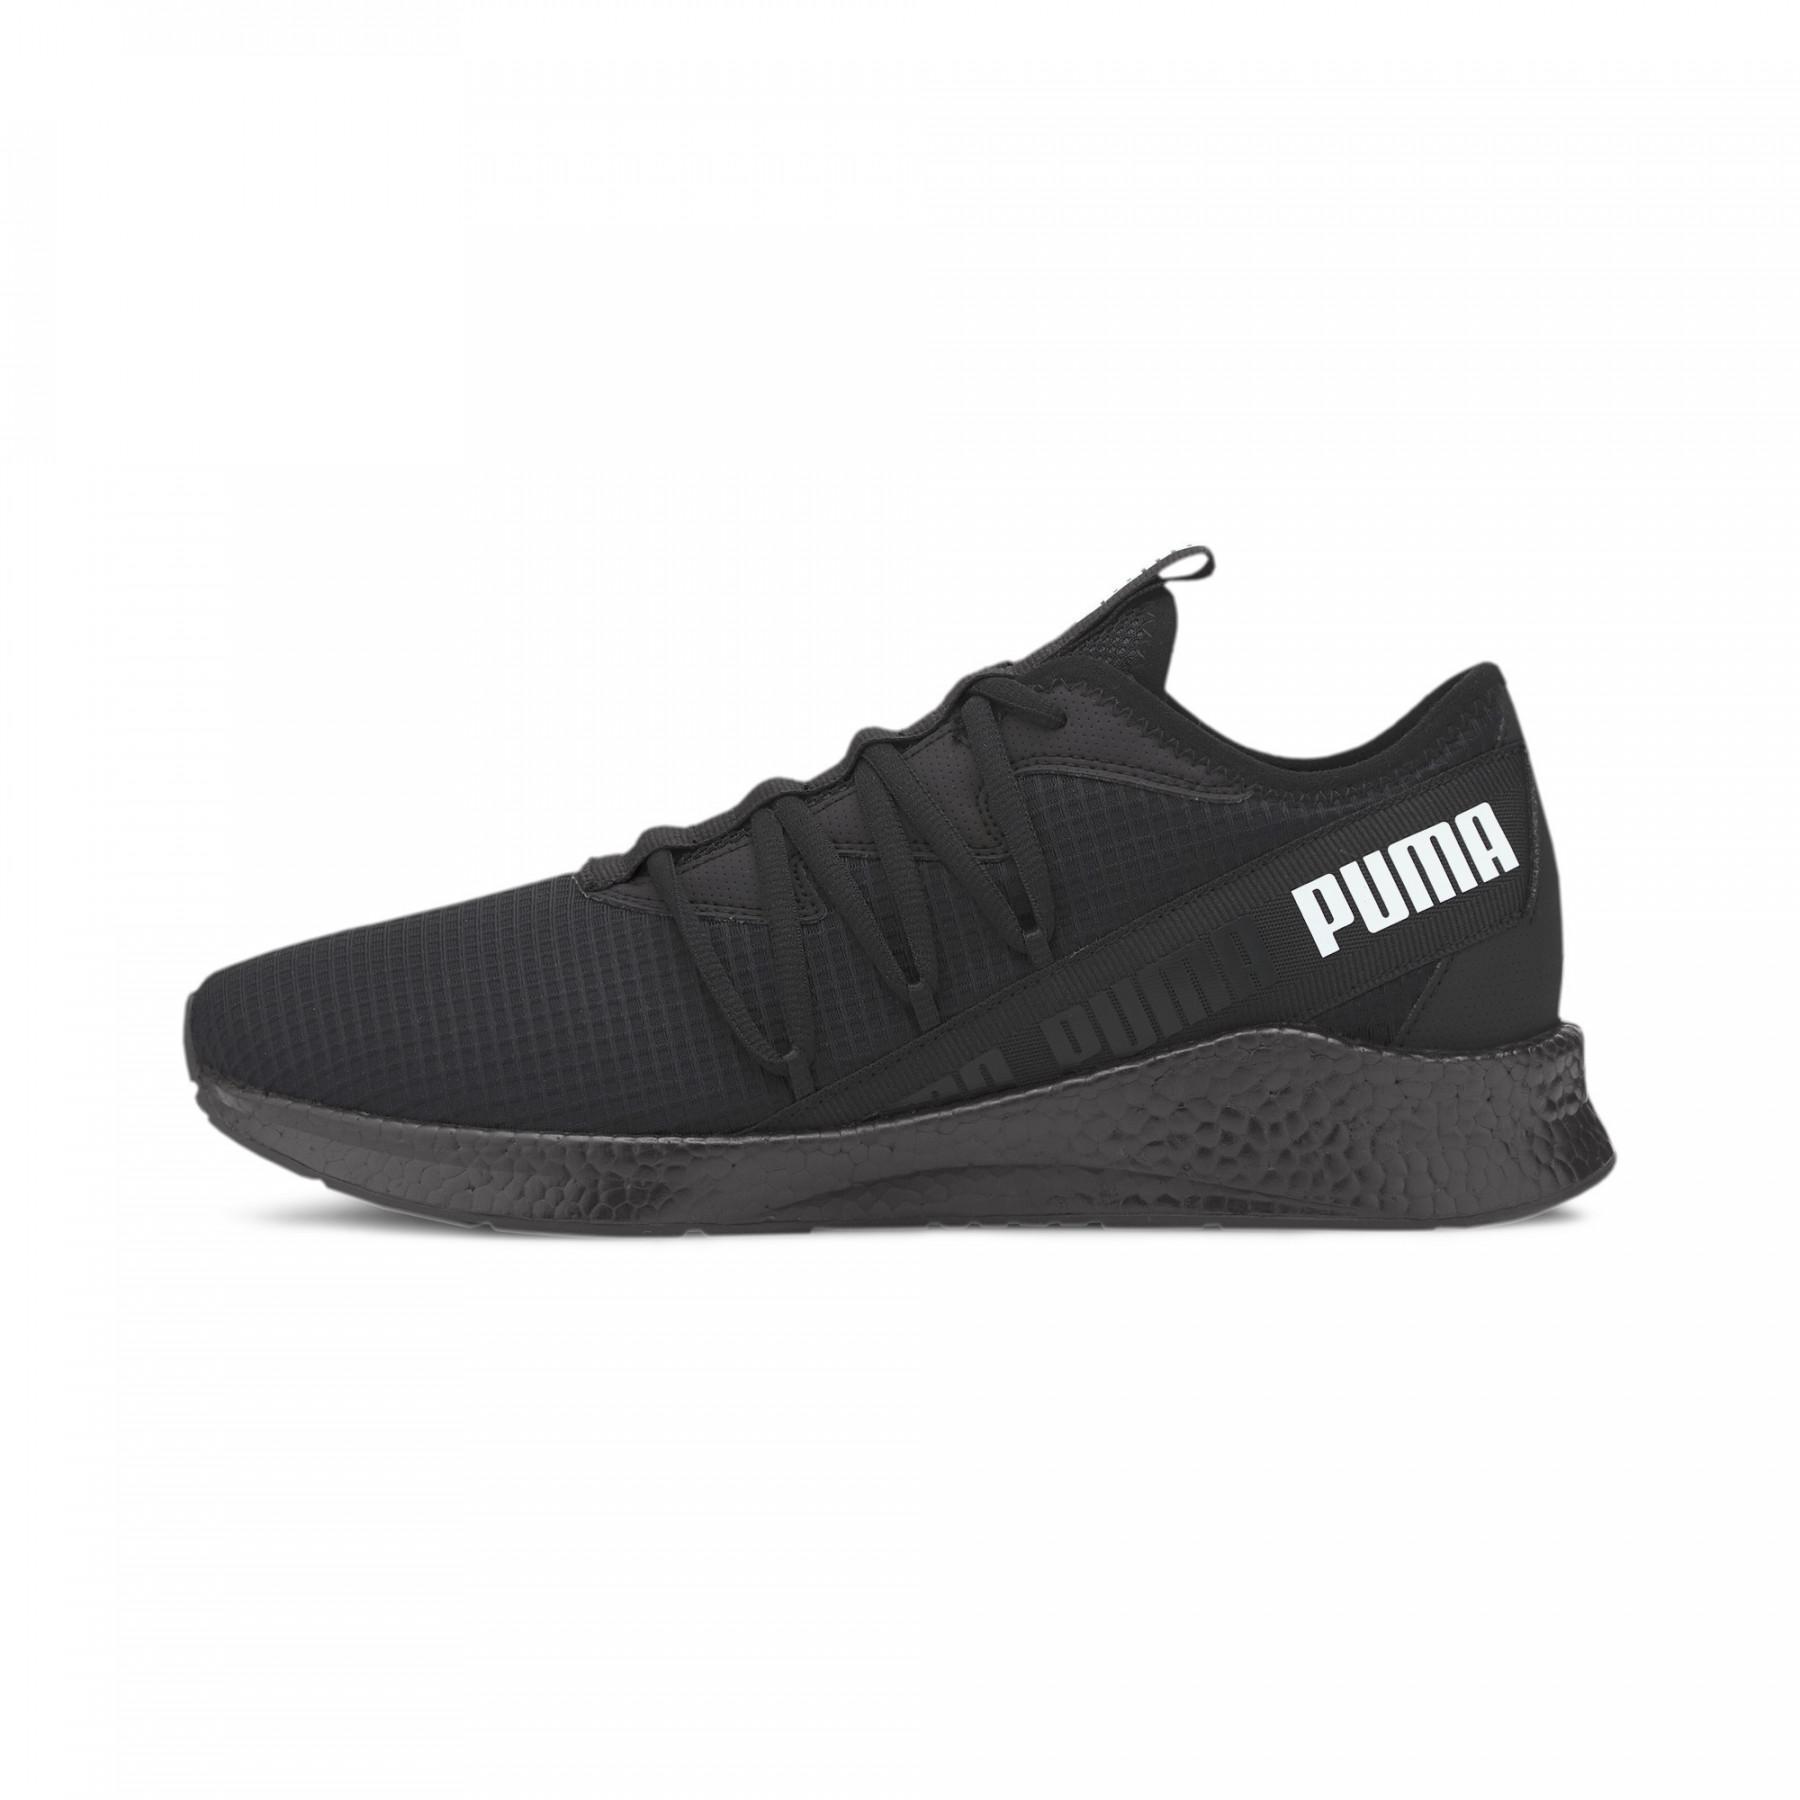 Chaussures de running Puma Nrgy Star New Core